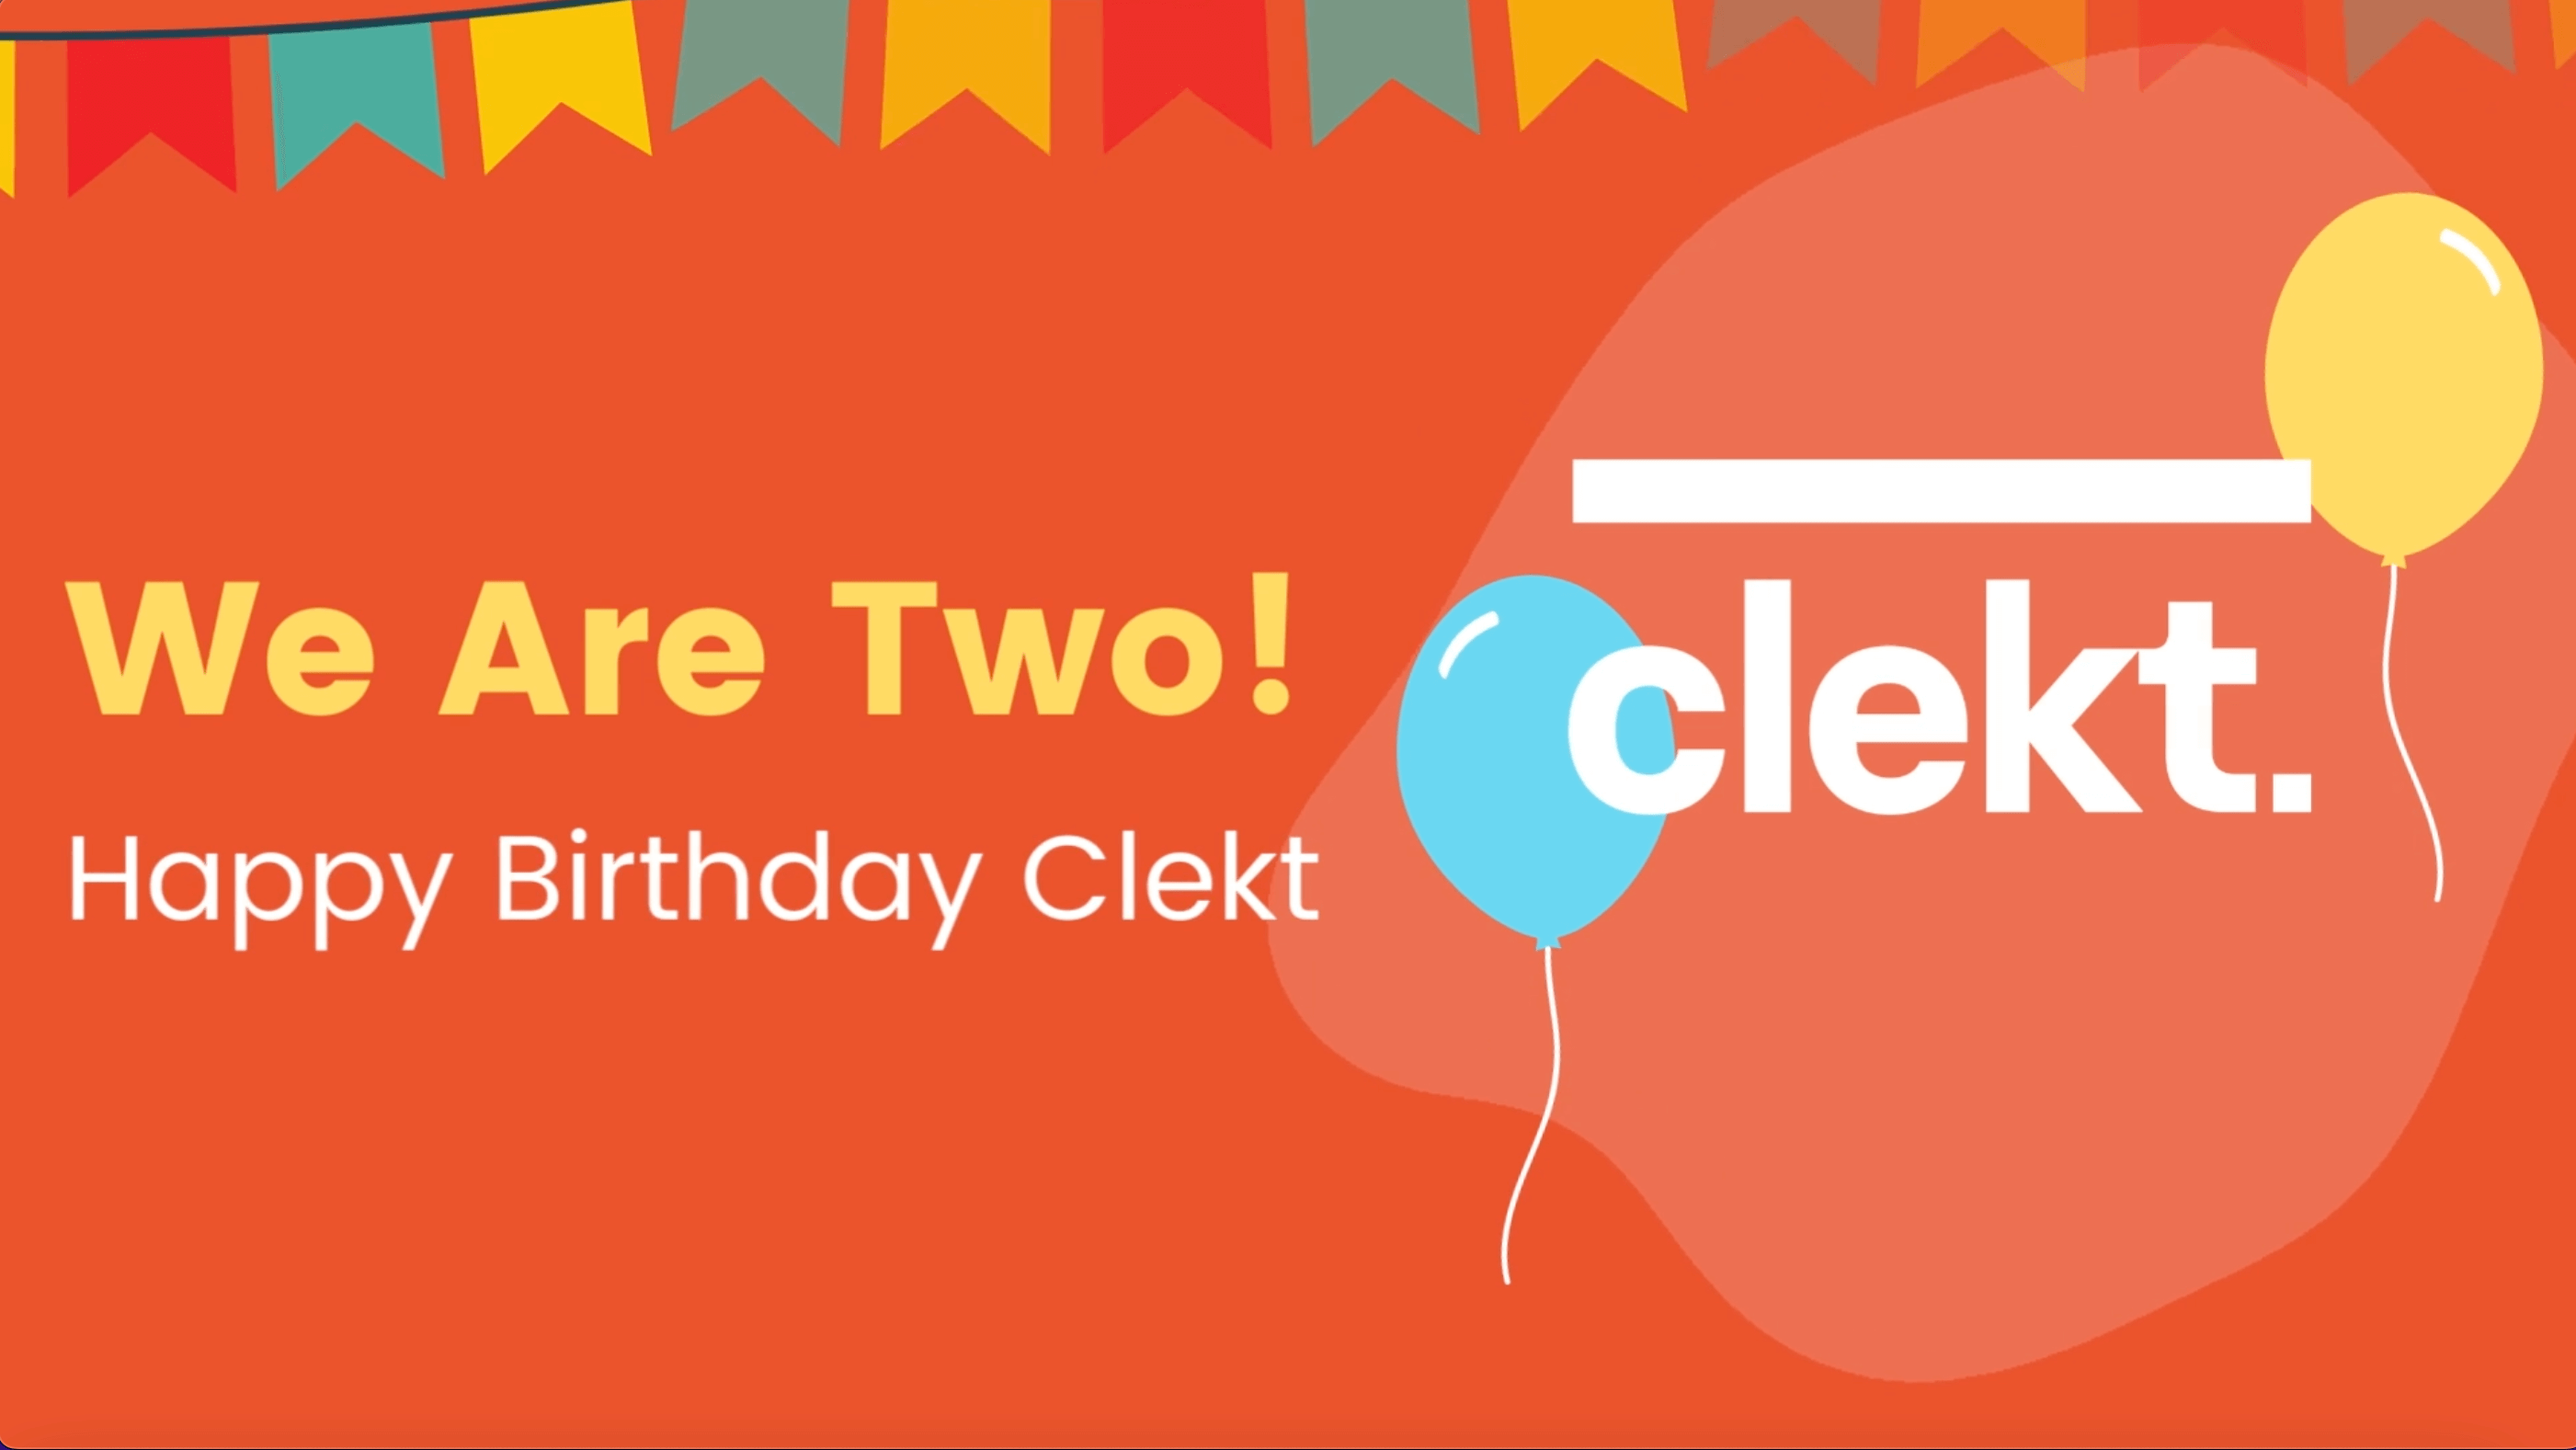 Data centric Clekt is 2 Happy Birthday Wishes